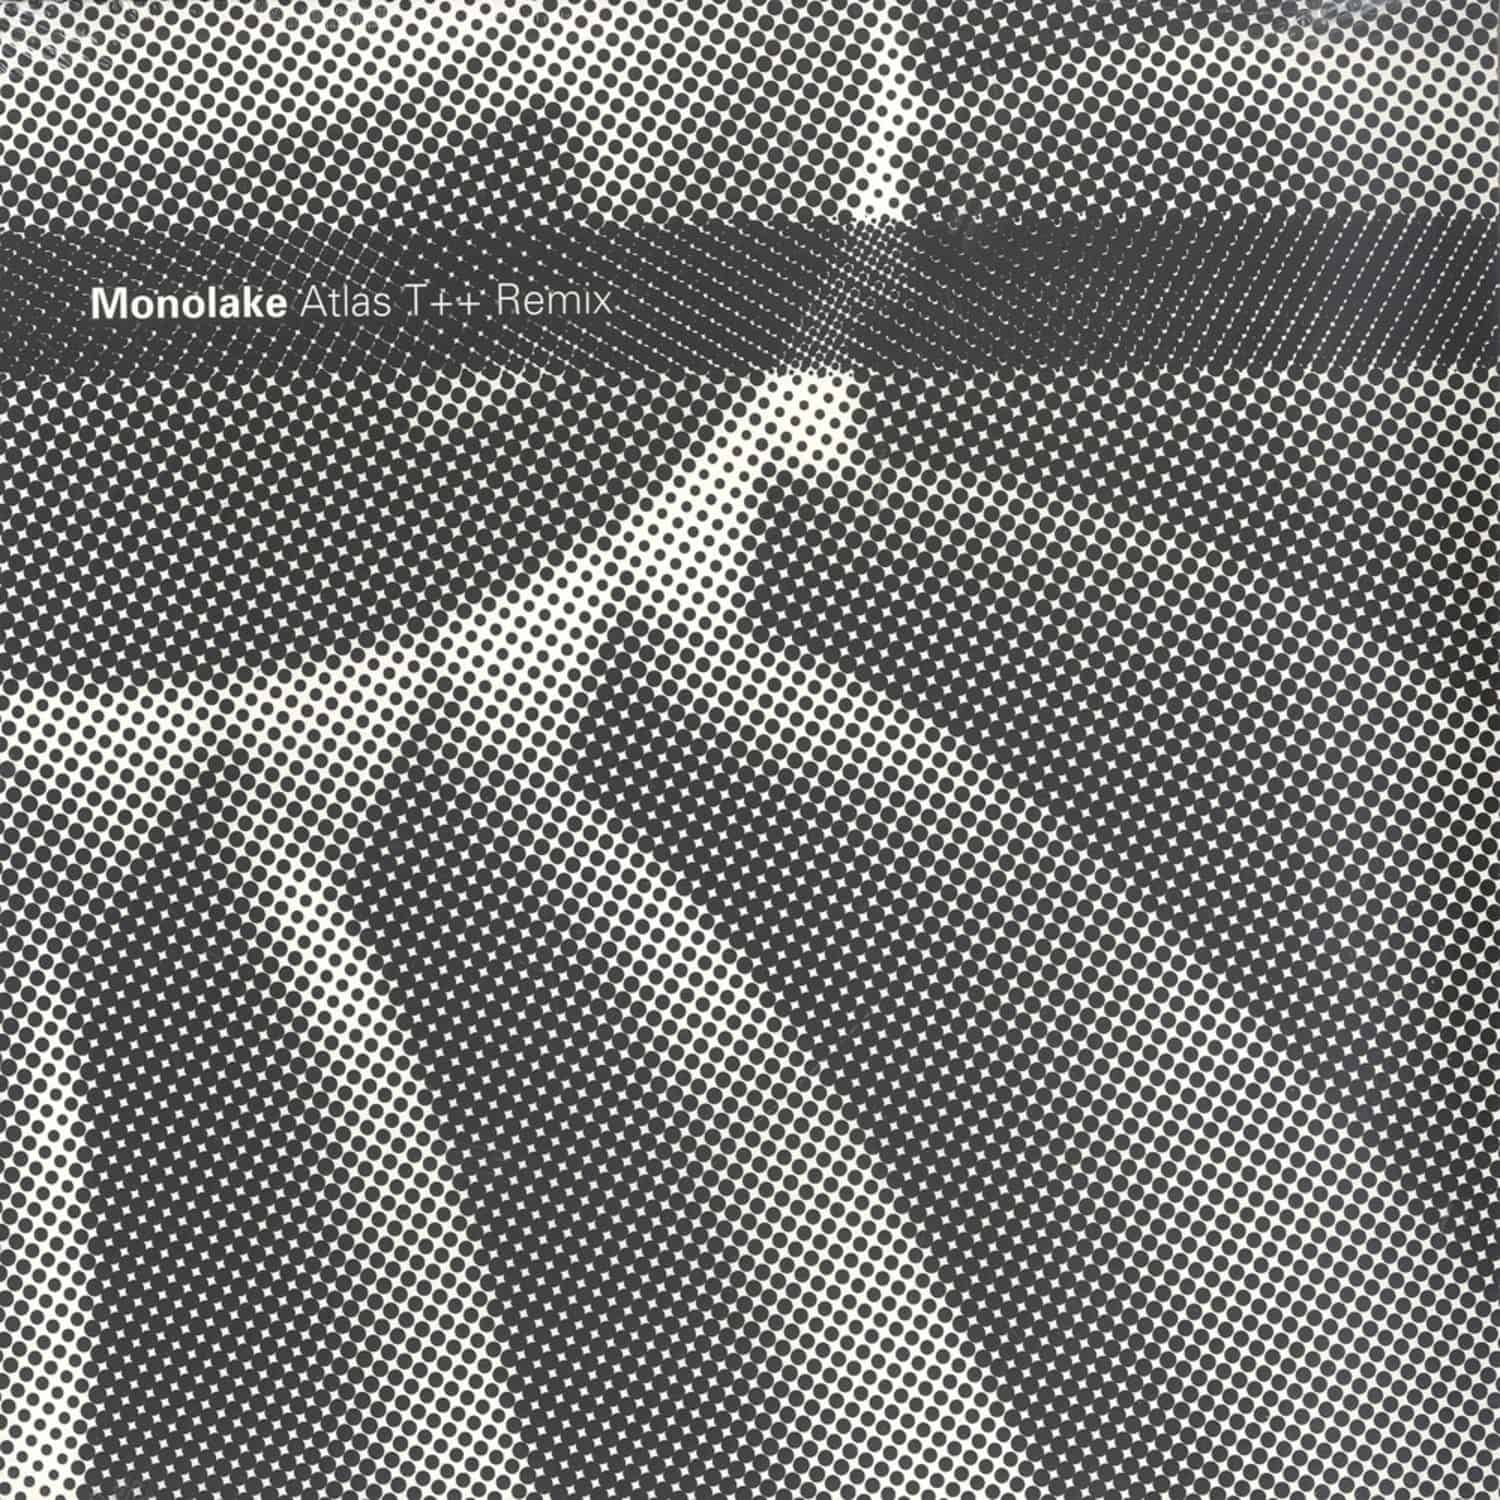 Monolake - ATLAS / T++ REMIX